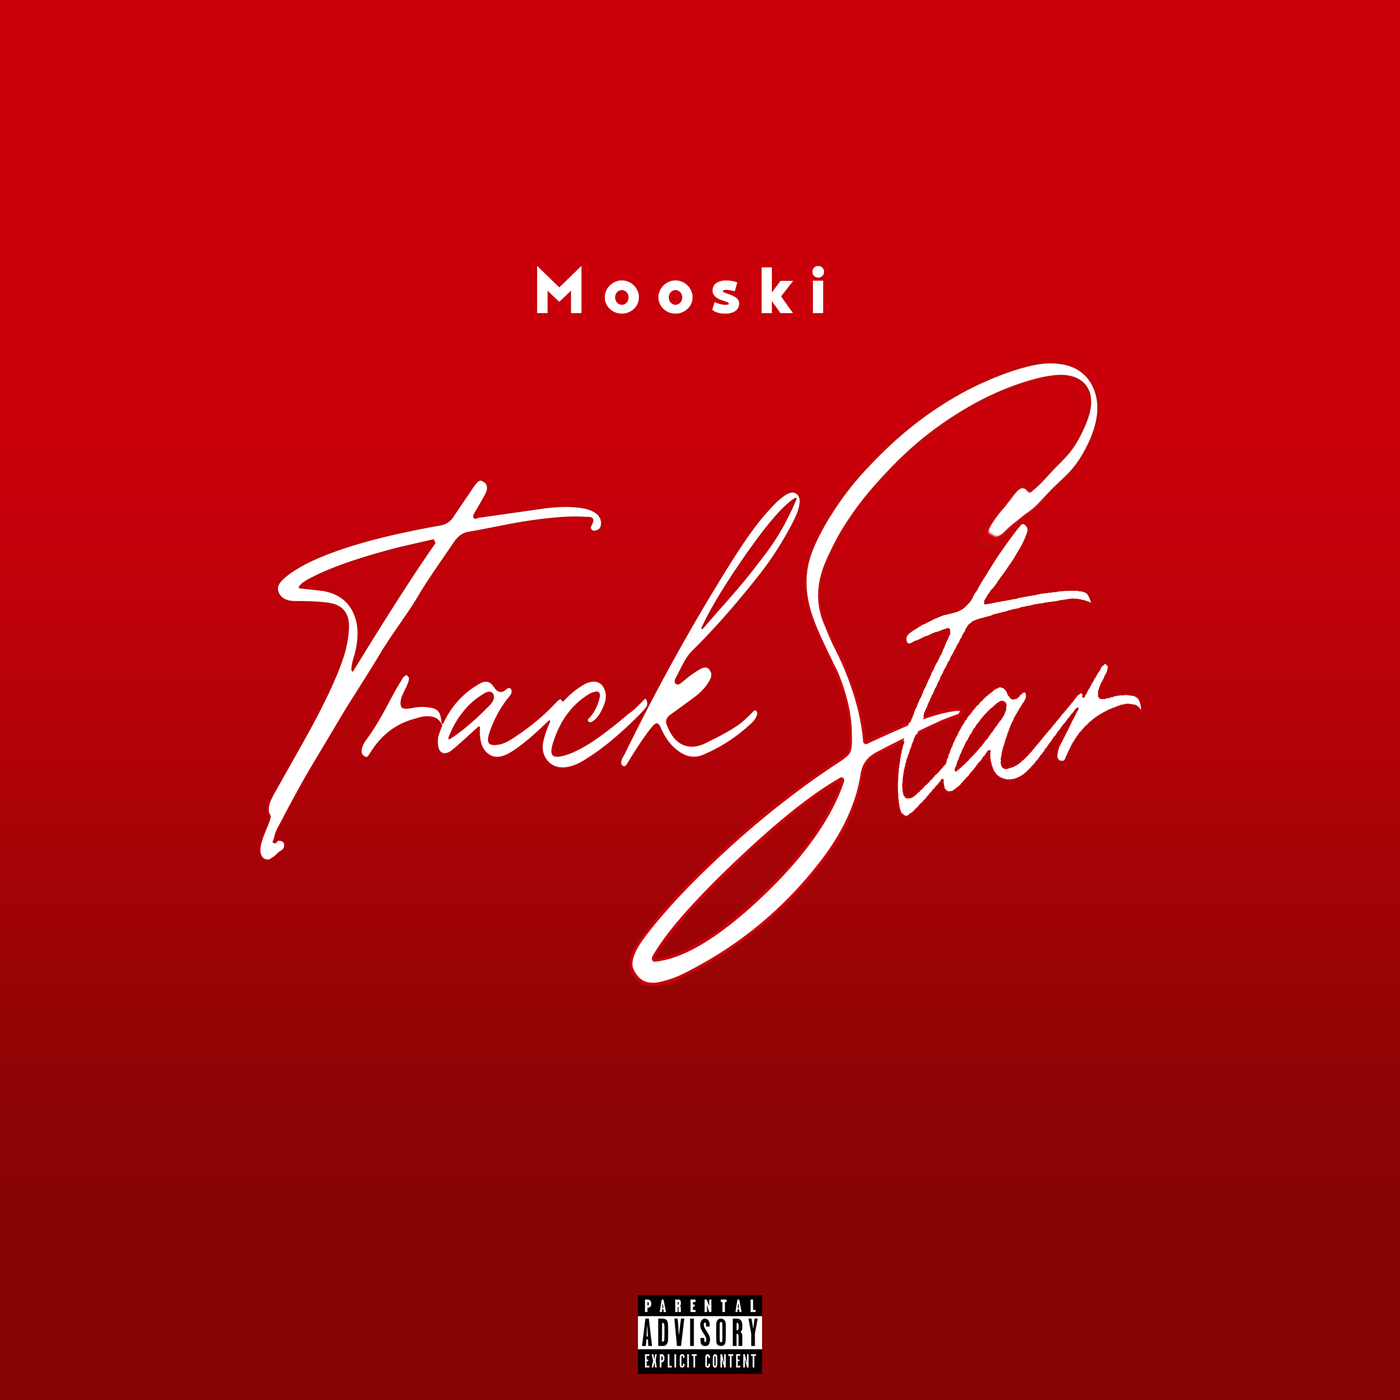 ¡Descargar Mooski - Track Star